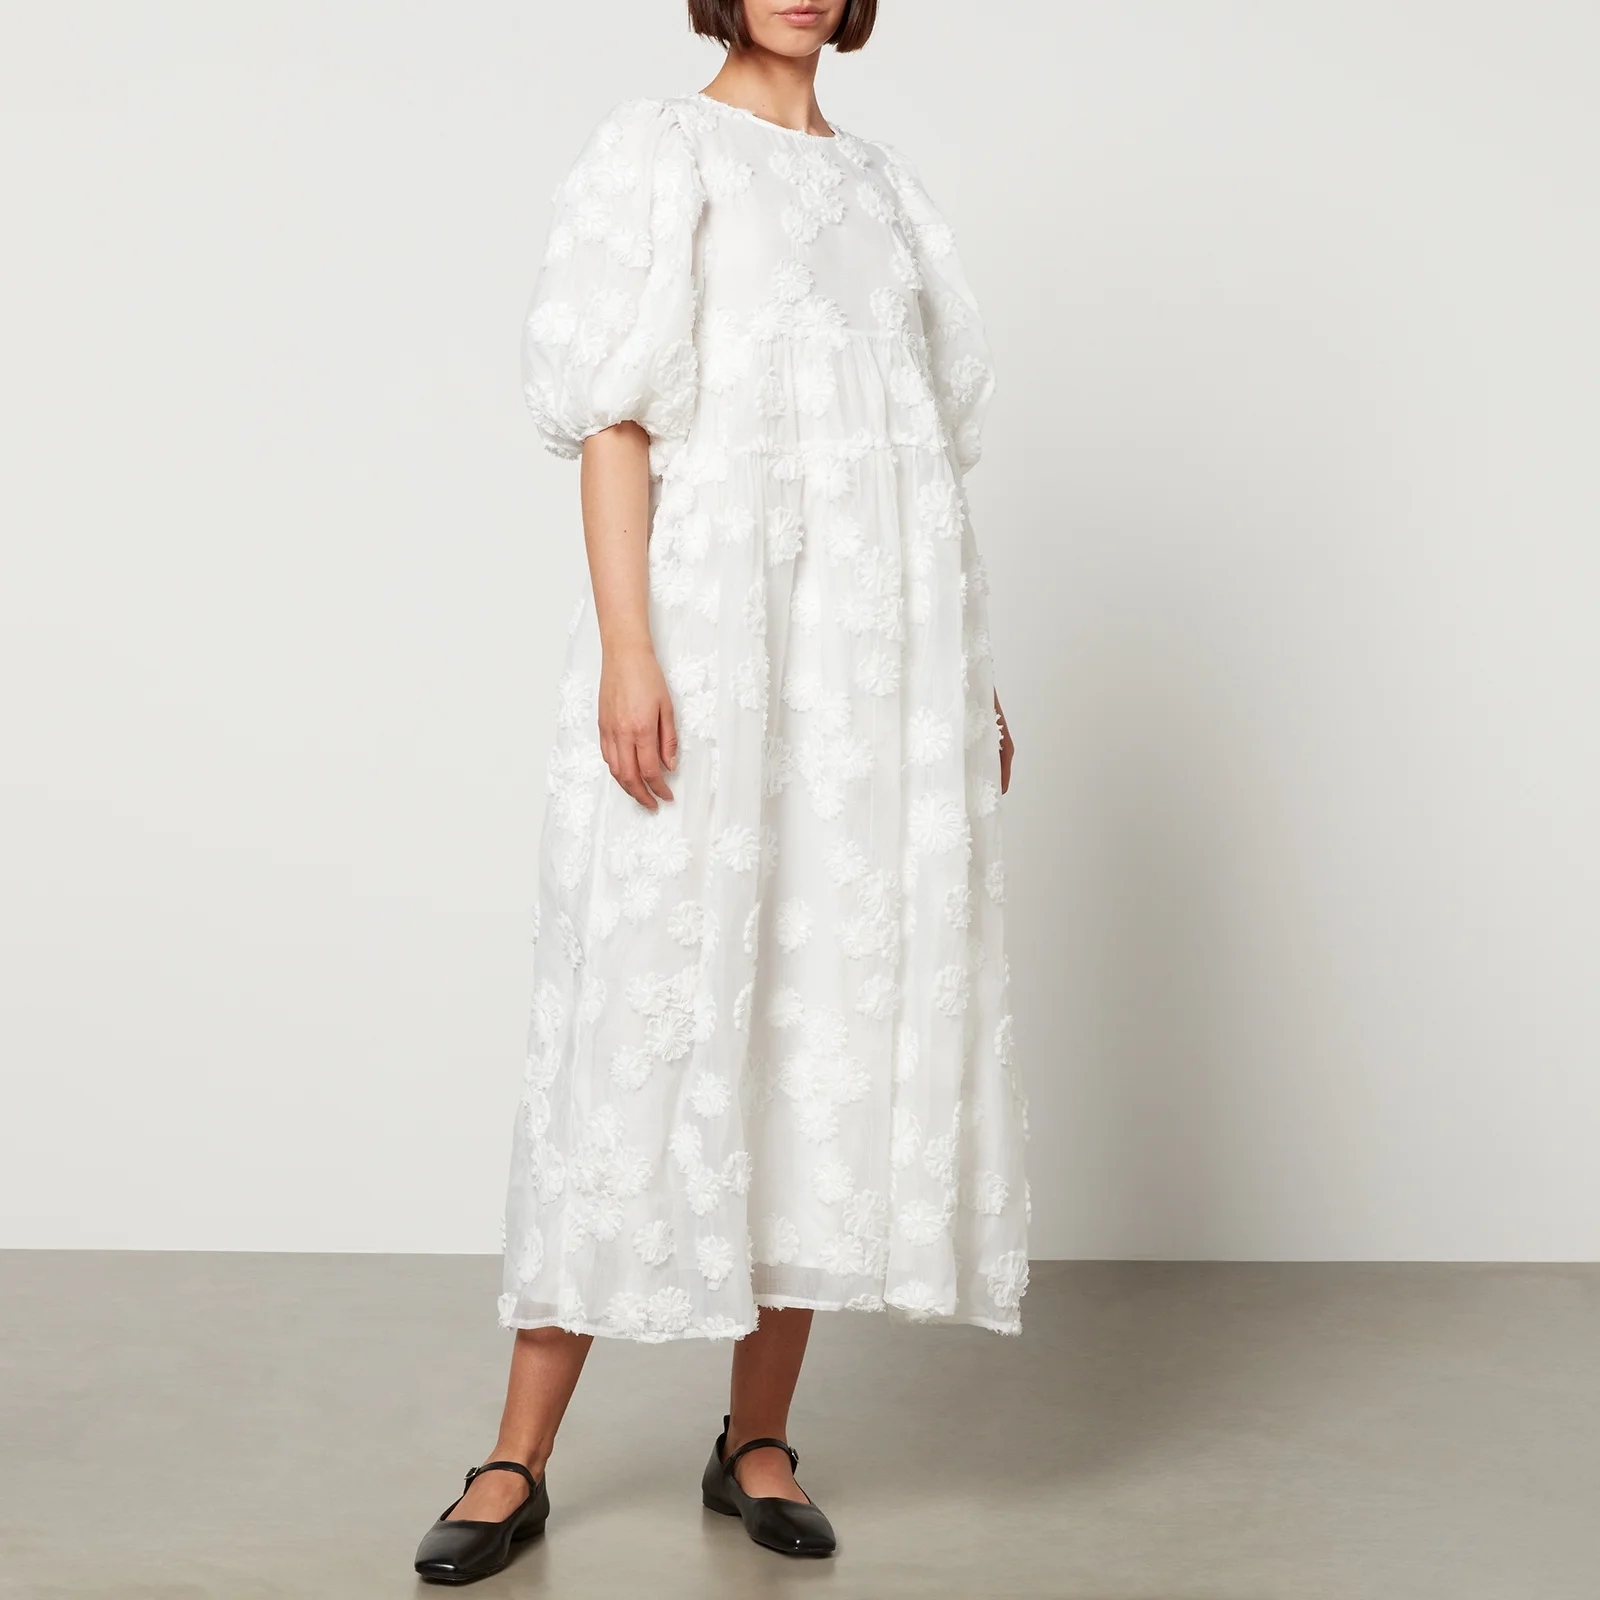 Sister Jane Dream Hazelnut Floral-Jacquard Midi Dress Image 1